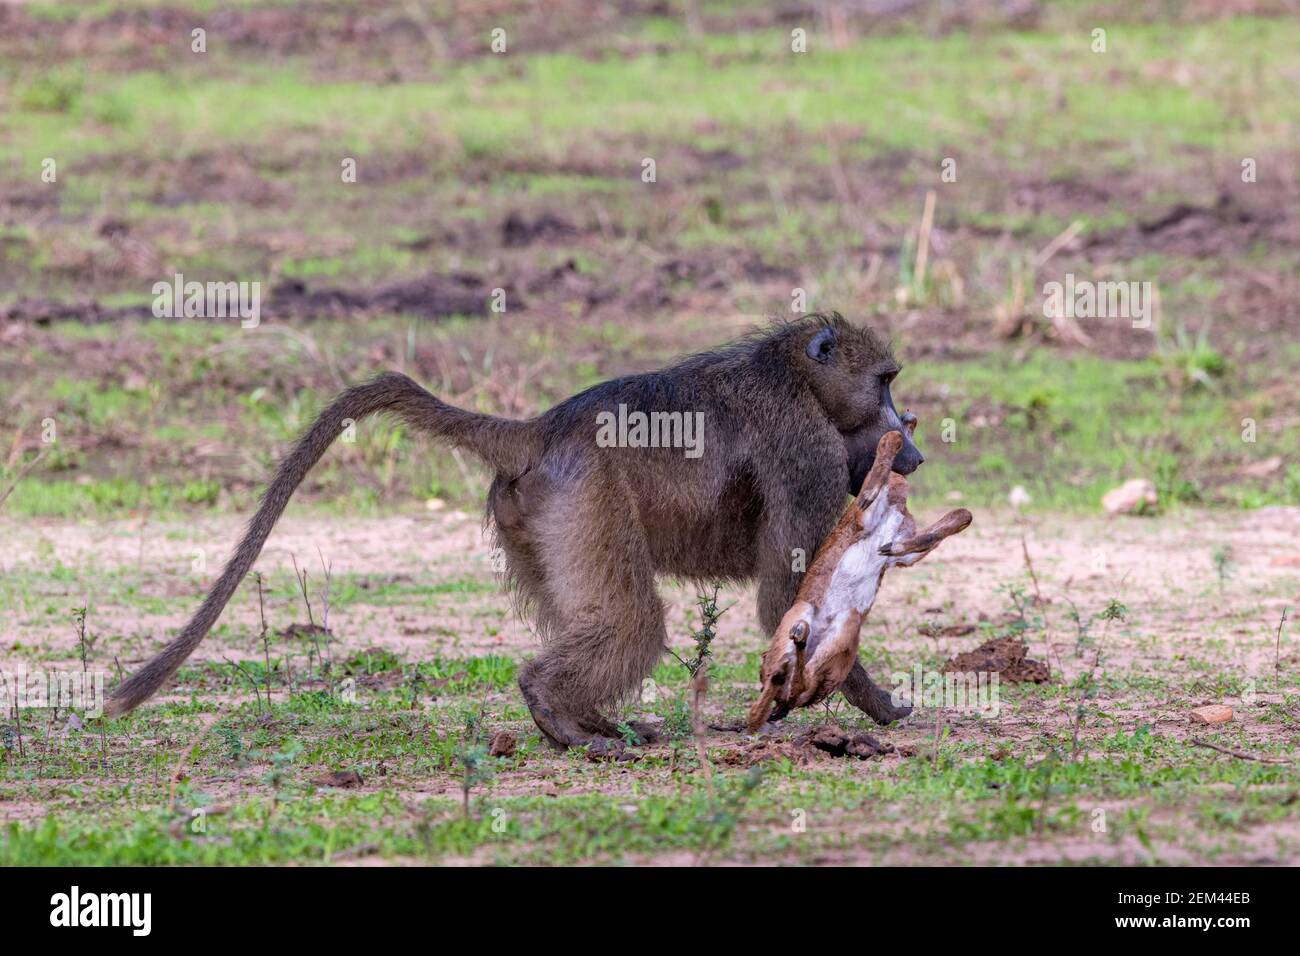 A large male baboon, Papio ursinus, seen eating a baby Impala, Aepyceros melampus, in Zimbabwe's Mana Pools National Park. Stock Photo